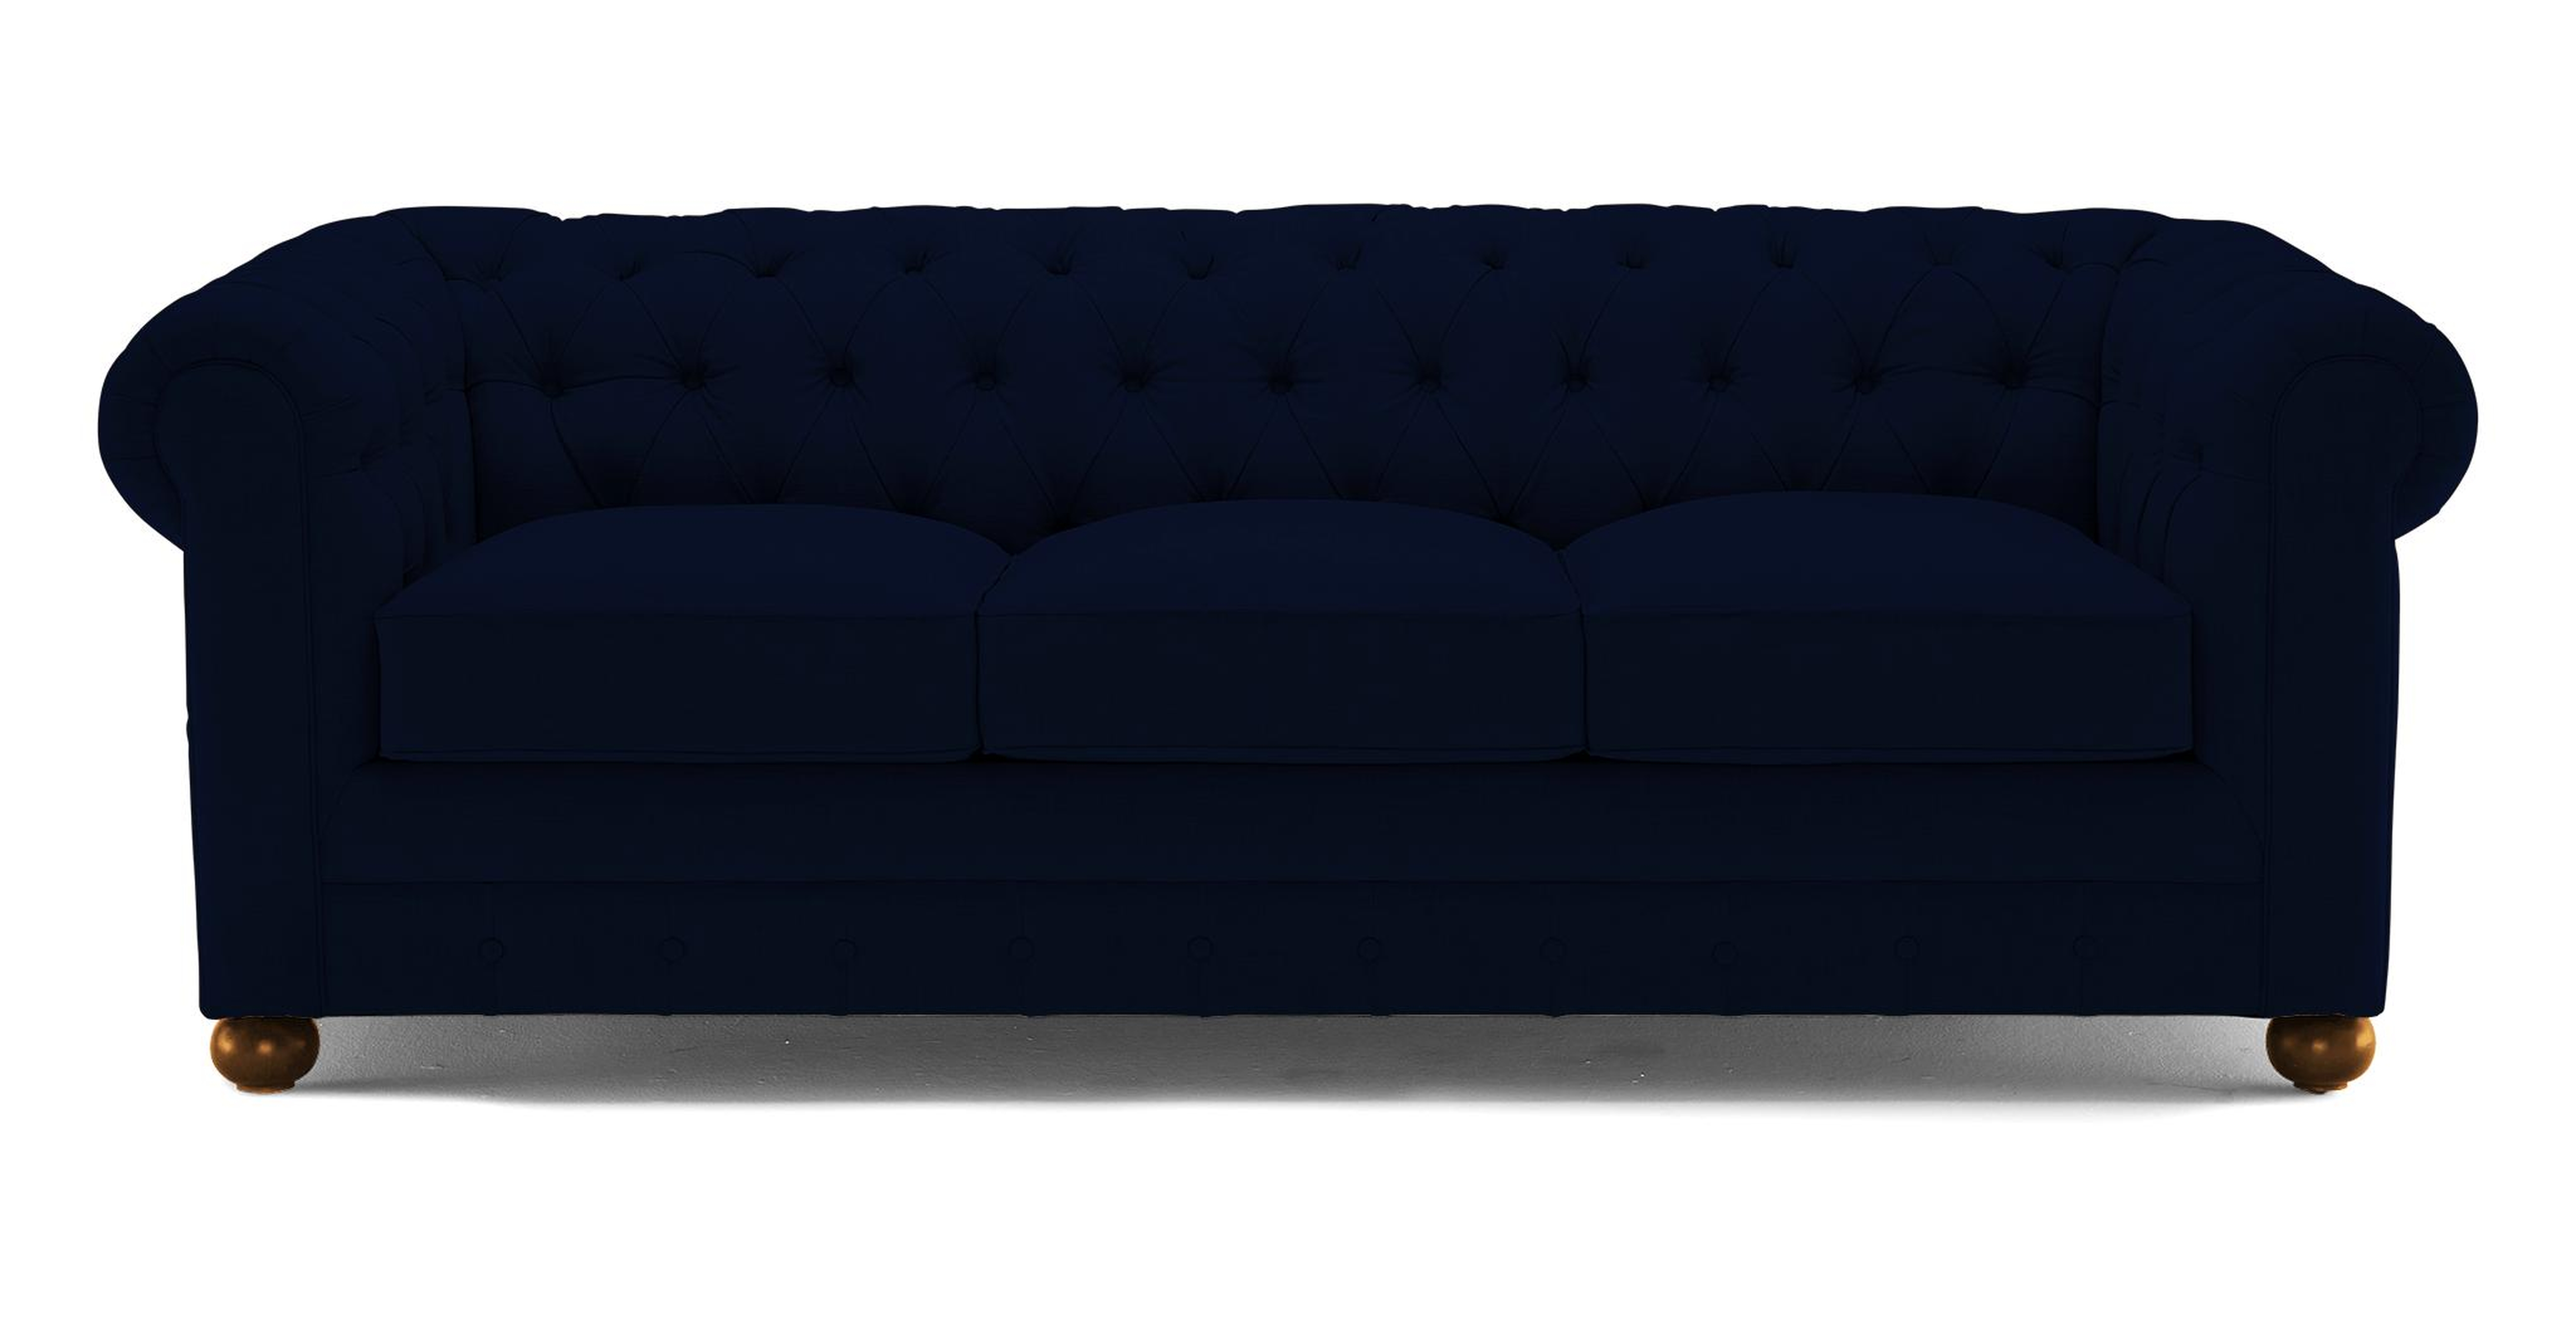 Blue Liam Mid Century Modern Sleeper Sofa - Royale Cobalt - Mocha - Joybird